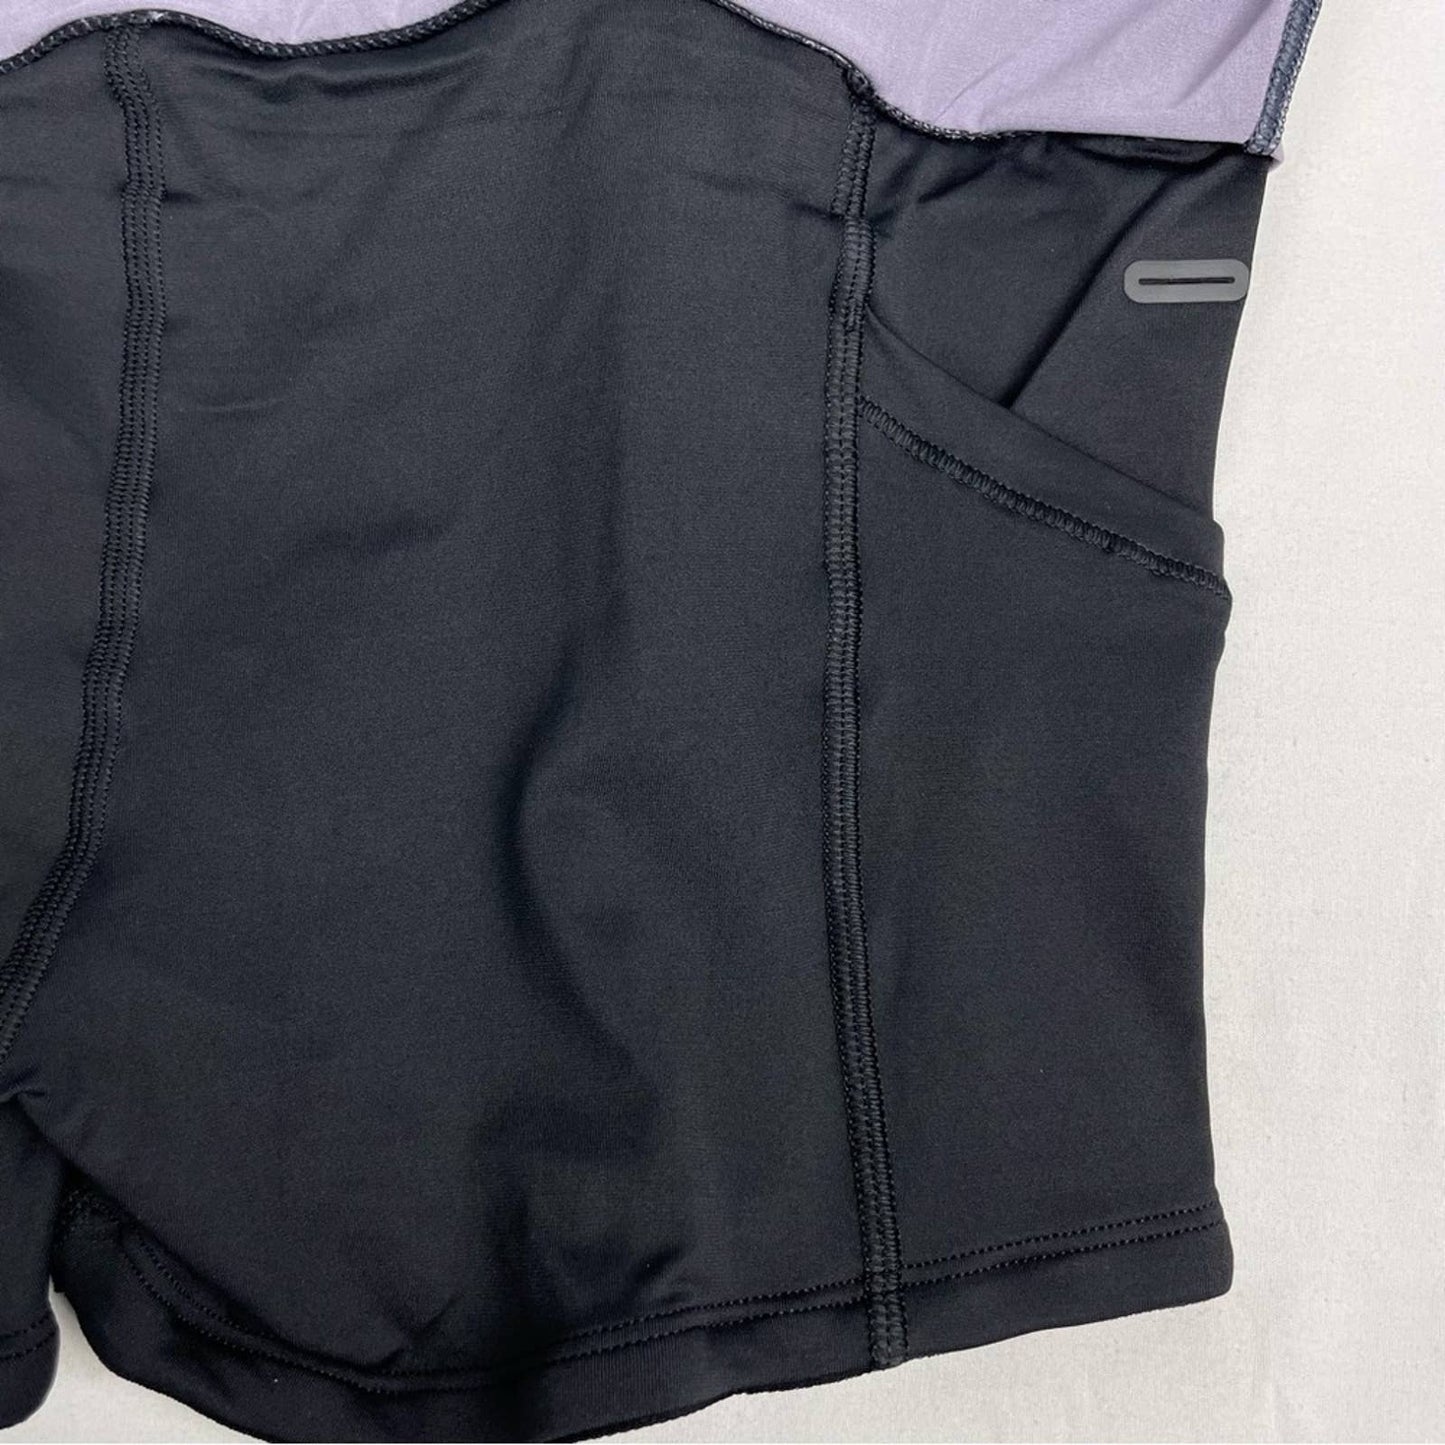 NEW Lululemon Tall Circuit Breaker II Disperse Dusky Lavender Active Skirt Skort Size 4